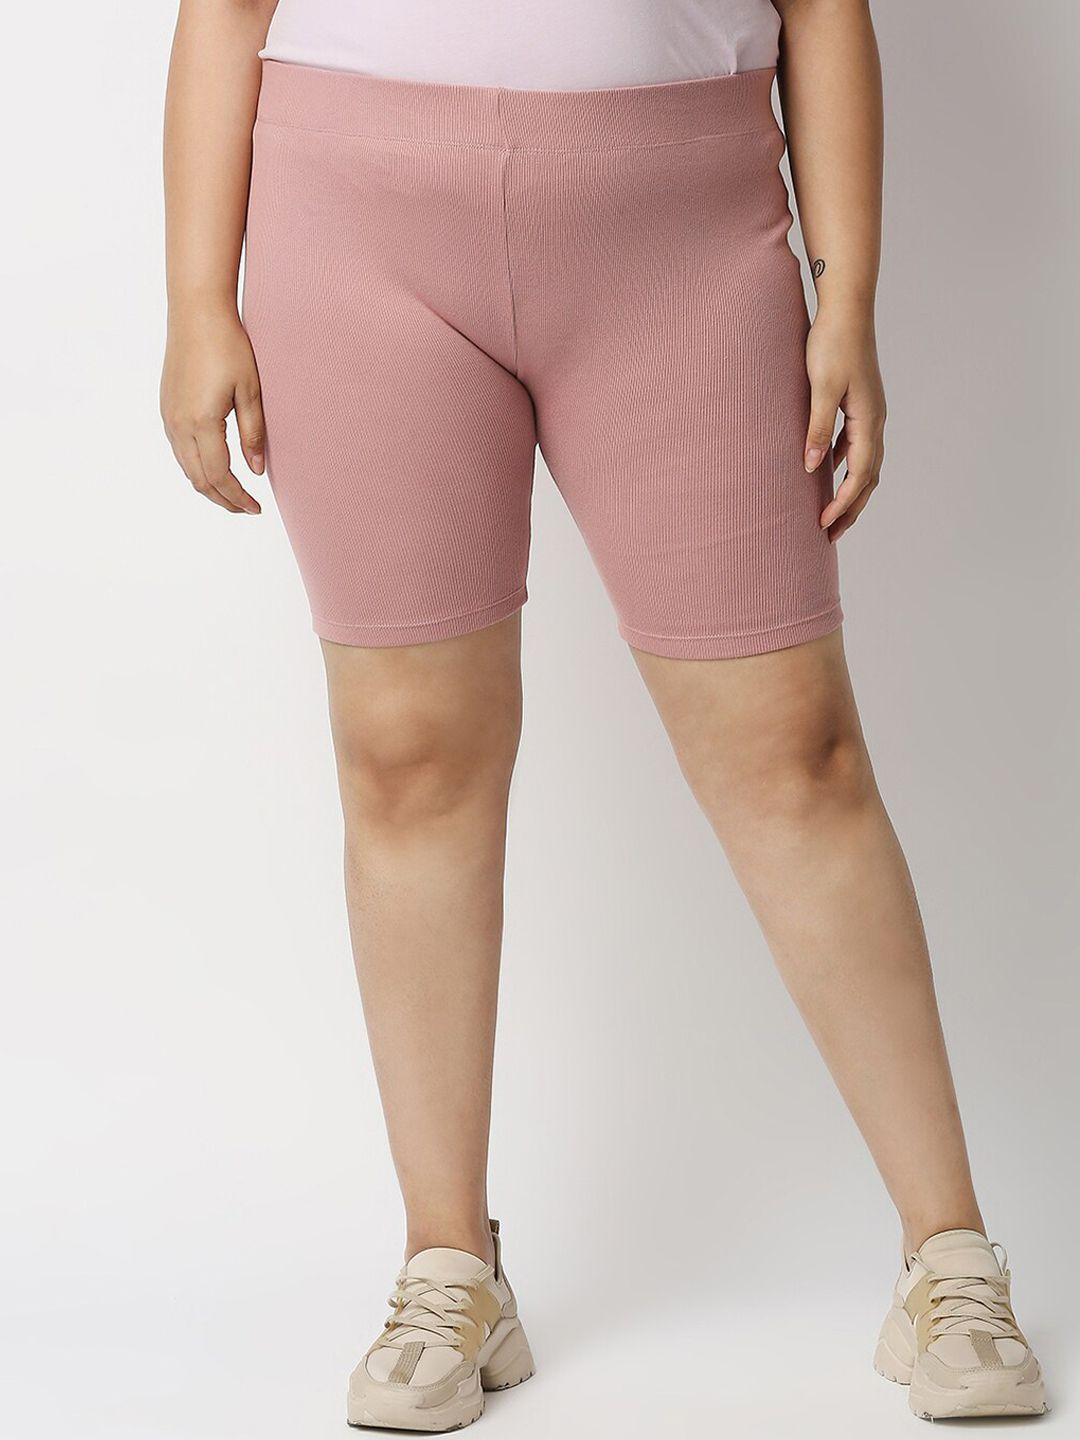 20dresses women pink slim fit cycling sports shorts